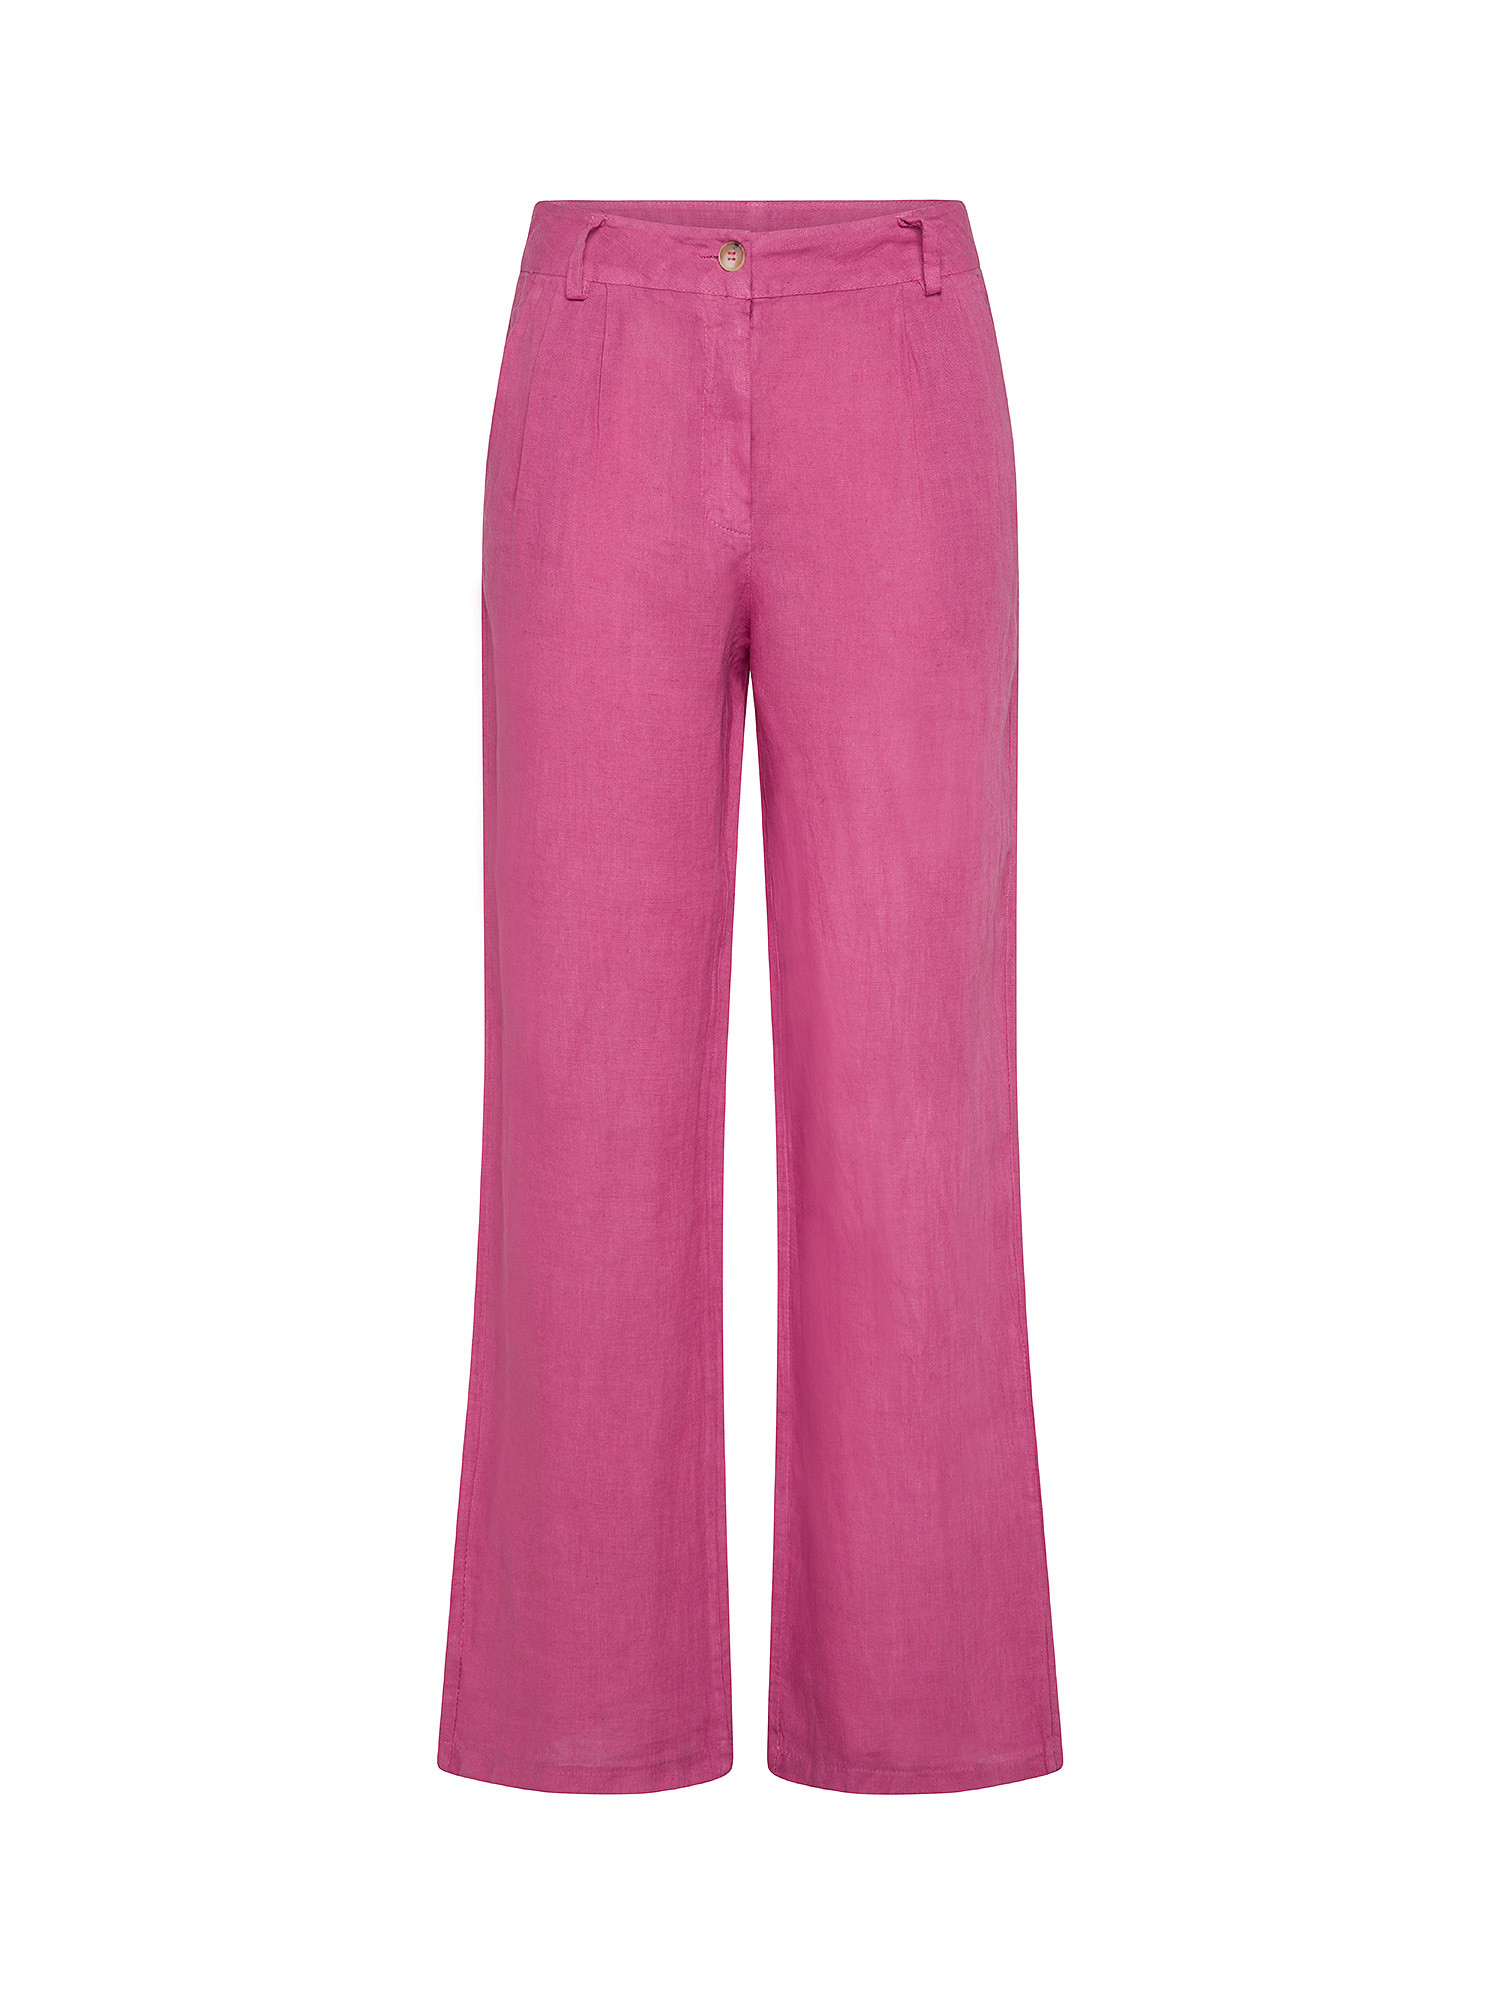 Koan - Pantaloni in lino con pinces, Rosa, large image number 0